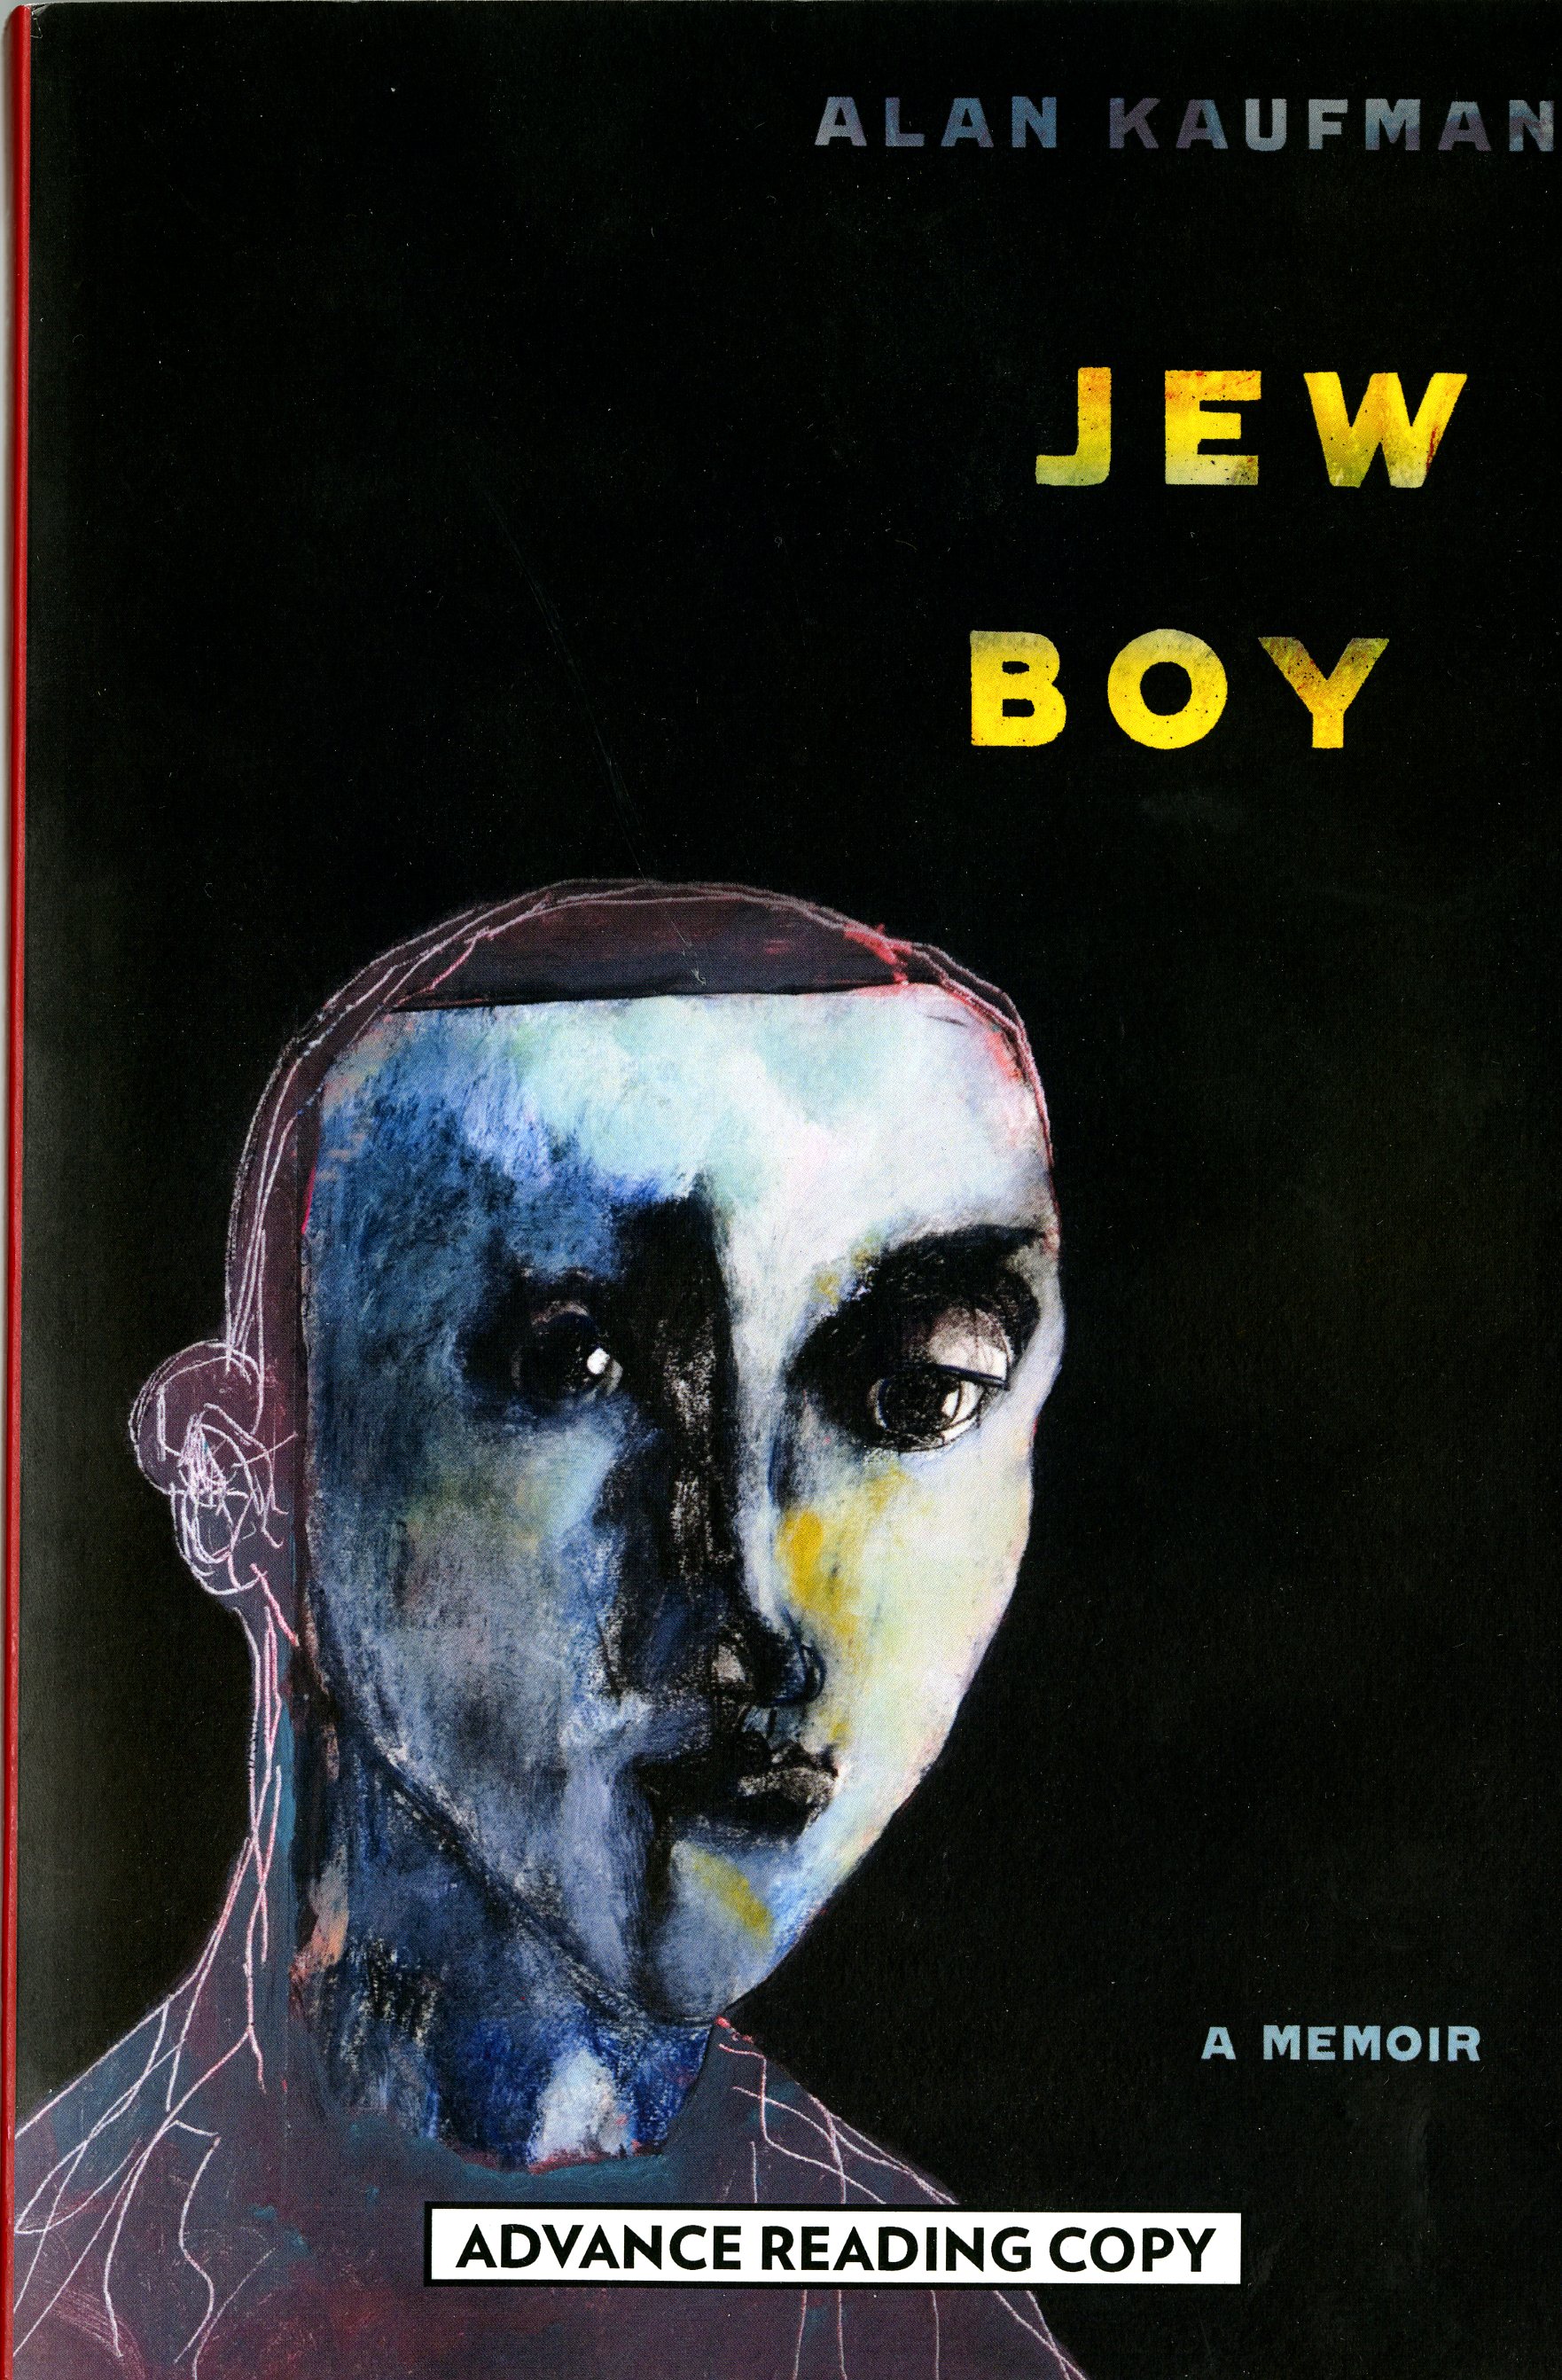 Kaufman, Alan. Jew Boy : A Memoir. Advance reading copy. Cornell paperback edition. Cornell University Press, 2017, from the Alan Kaufman papers